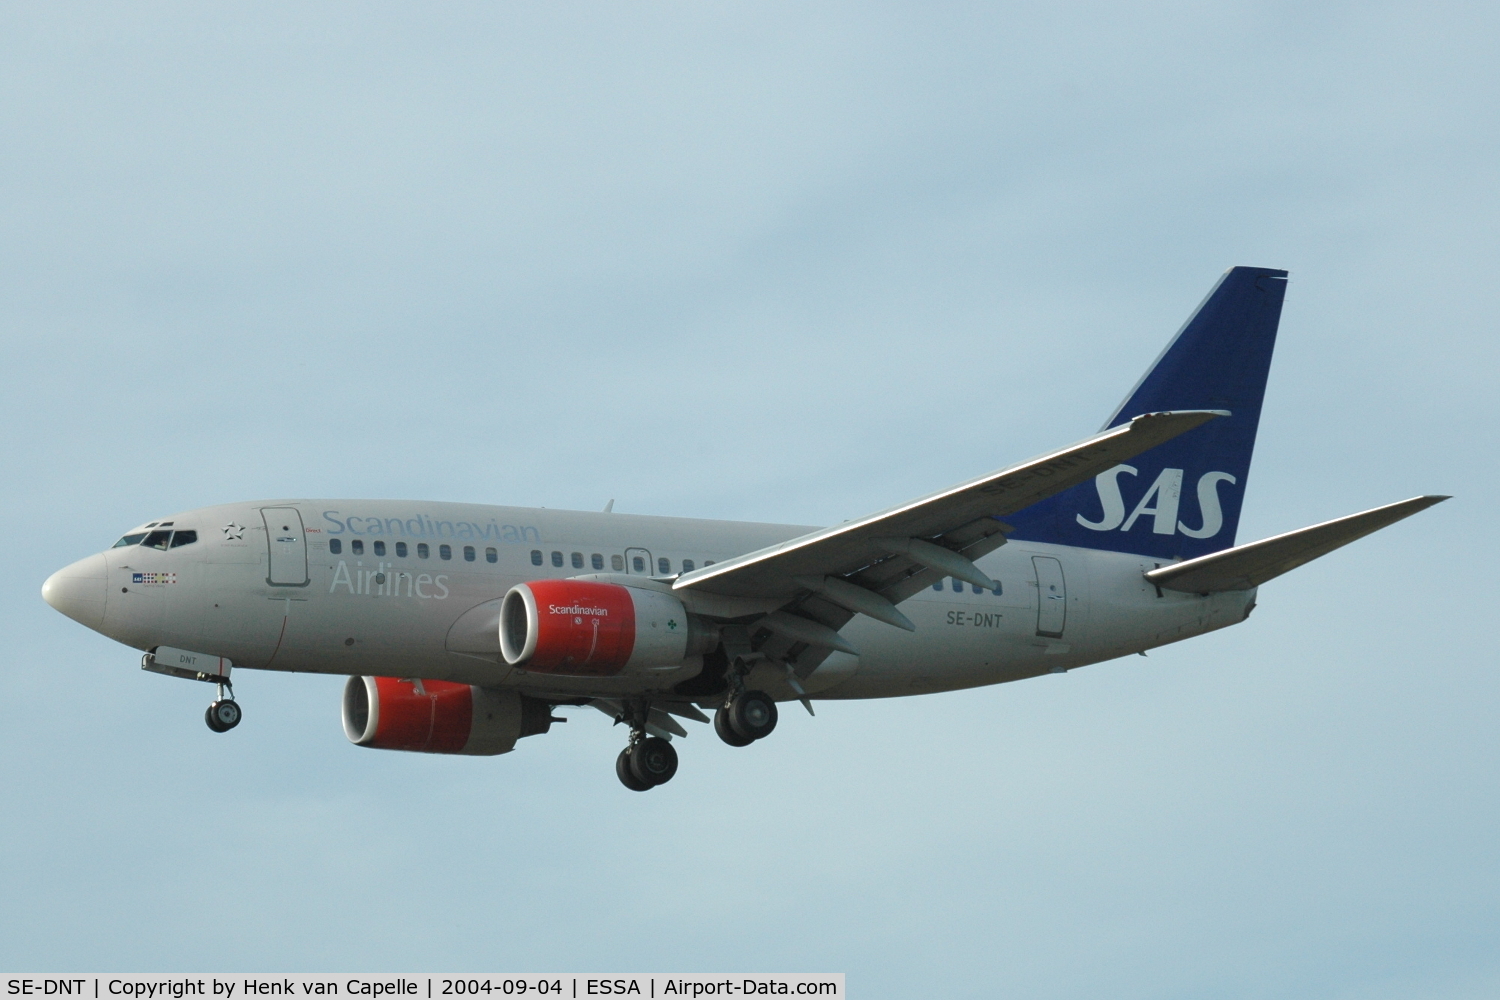 SE-DNT, 1999 Boeing 737-683 C/N 28302, SAS Boeing 737-600 about to land at stockholm Arlanda airport.